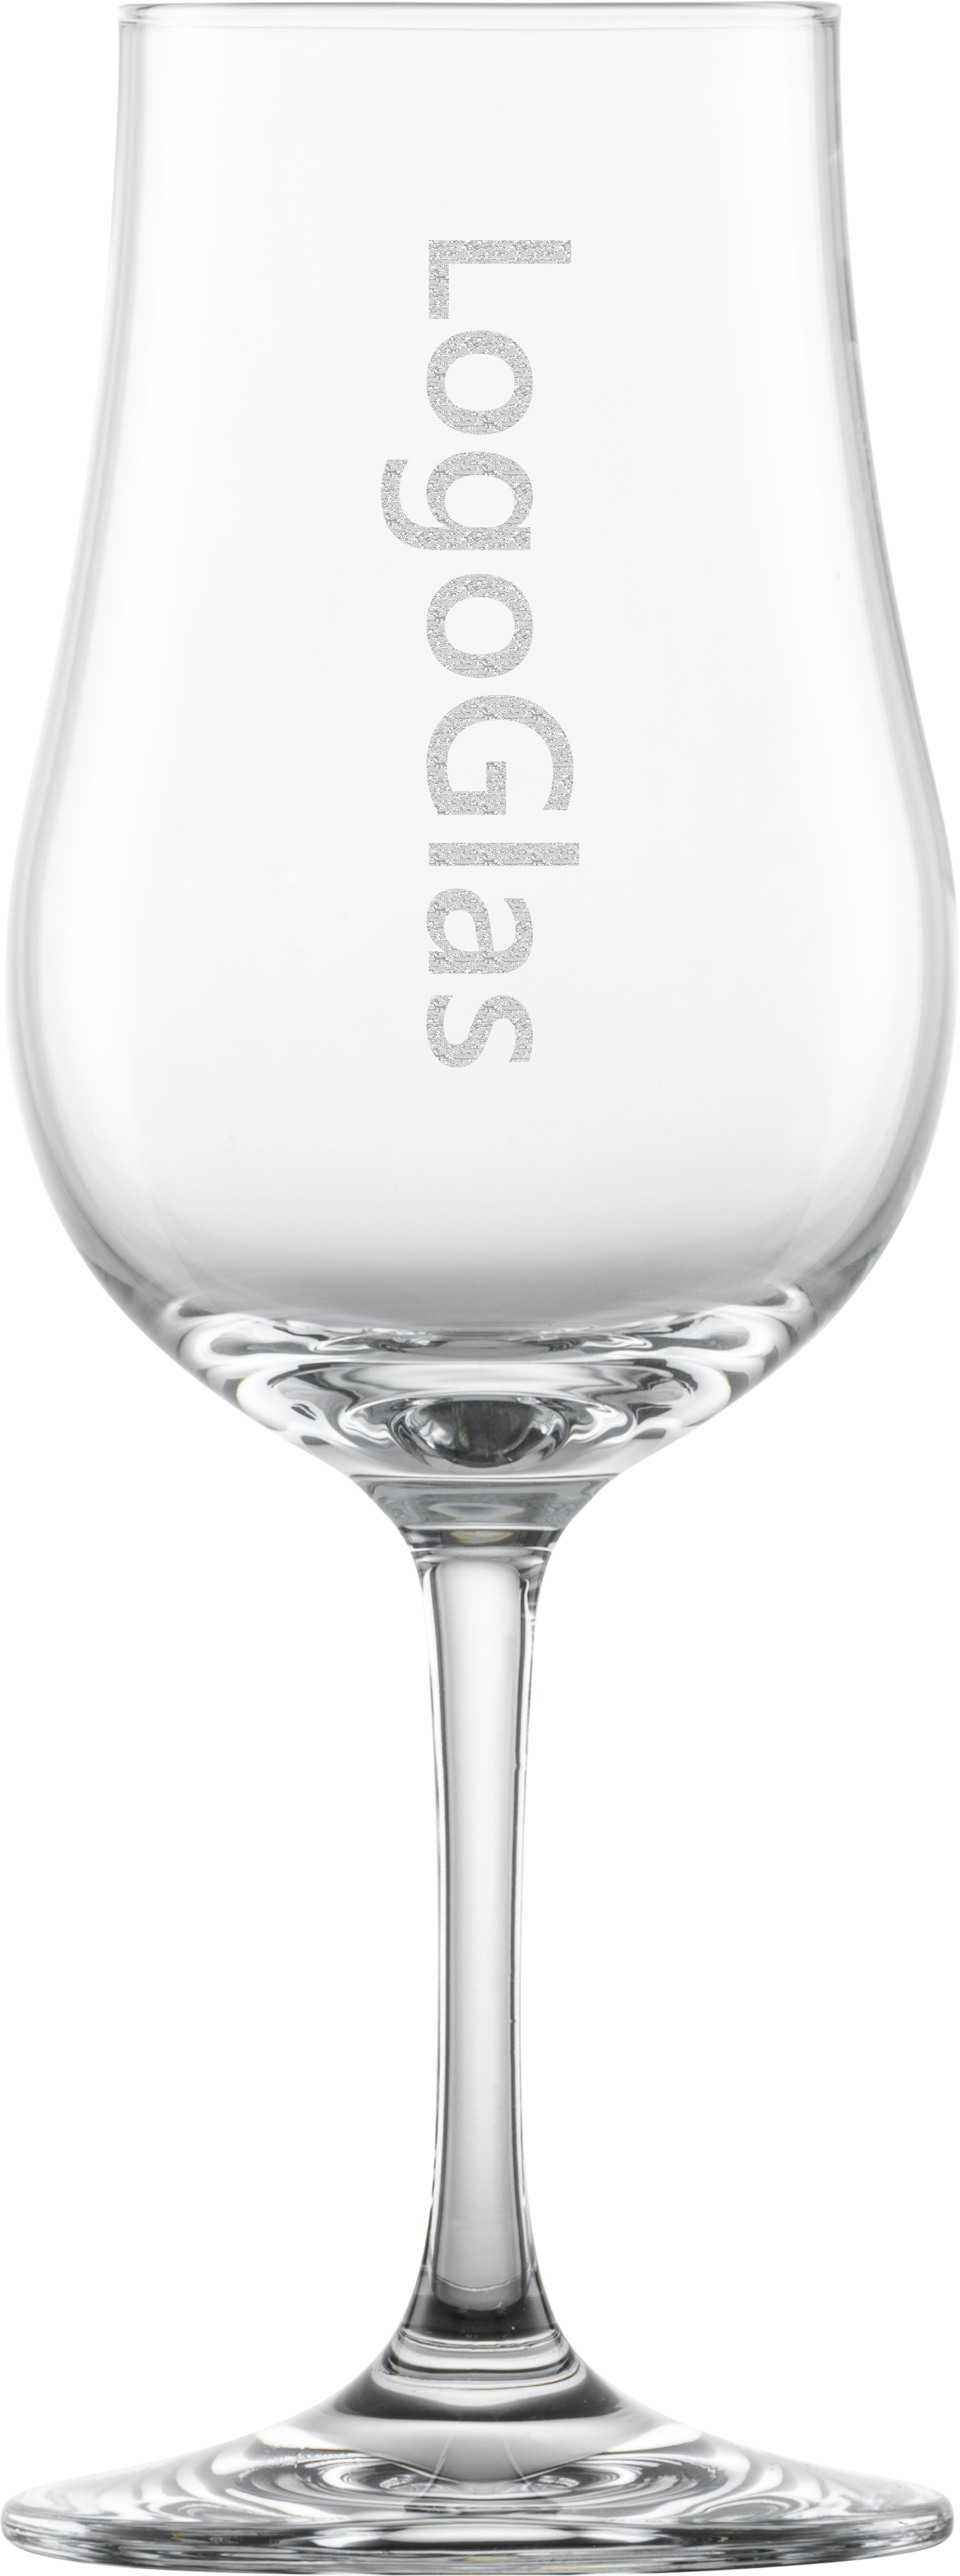 Nosingglas Schott mit Logo Gravur